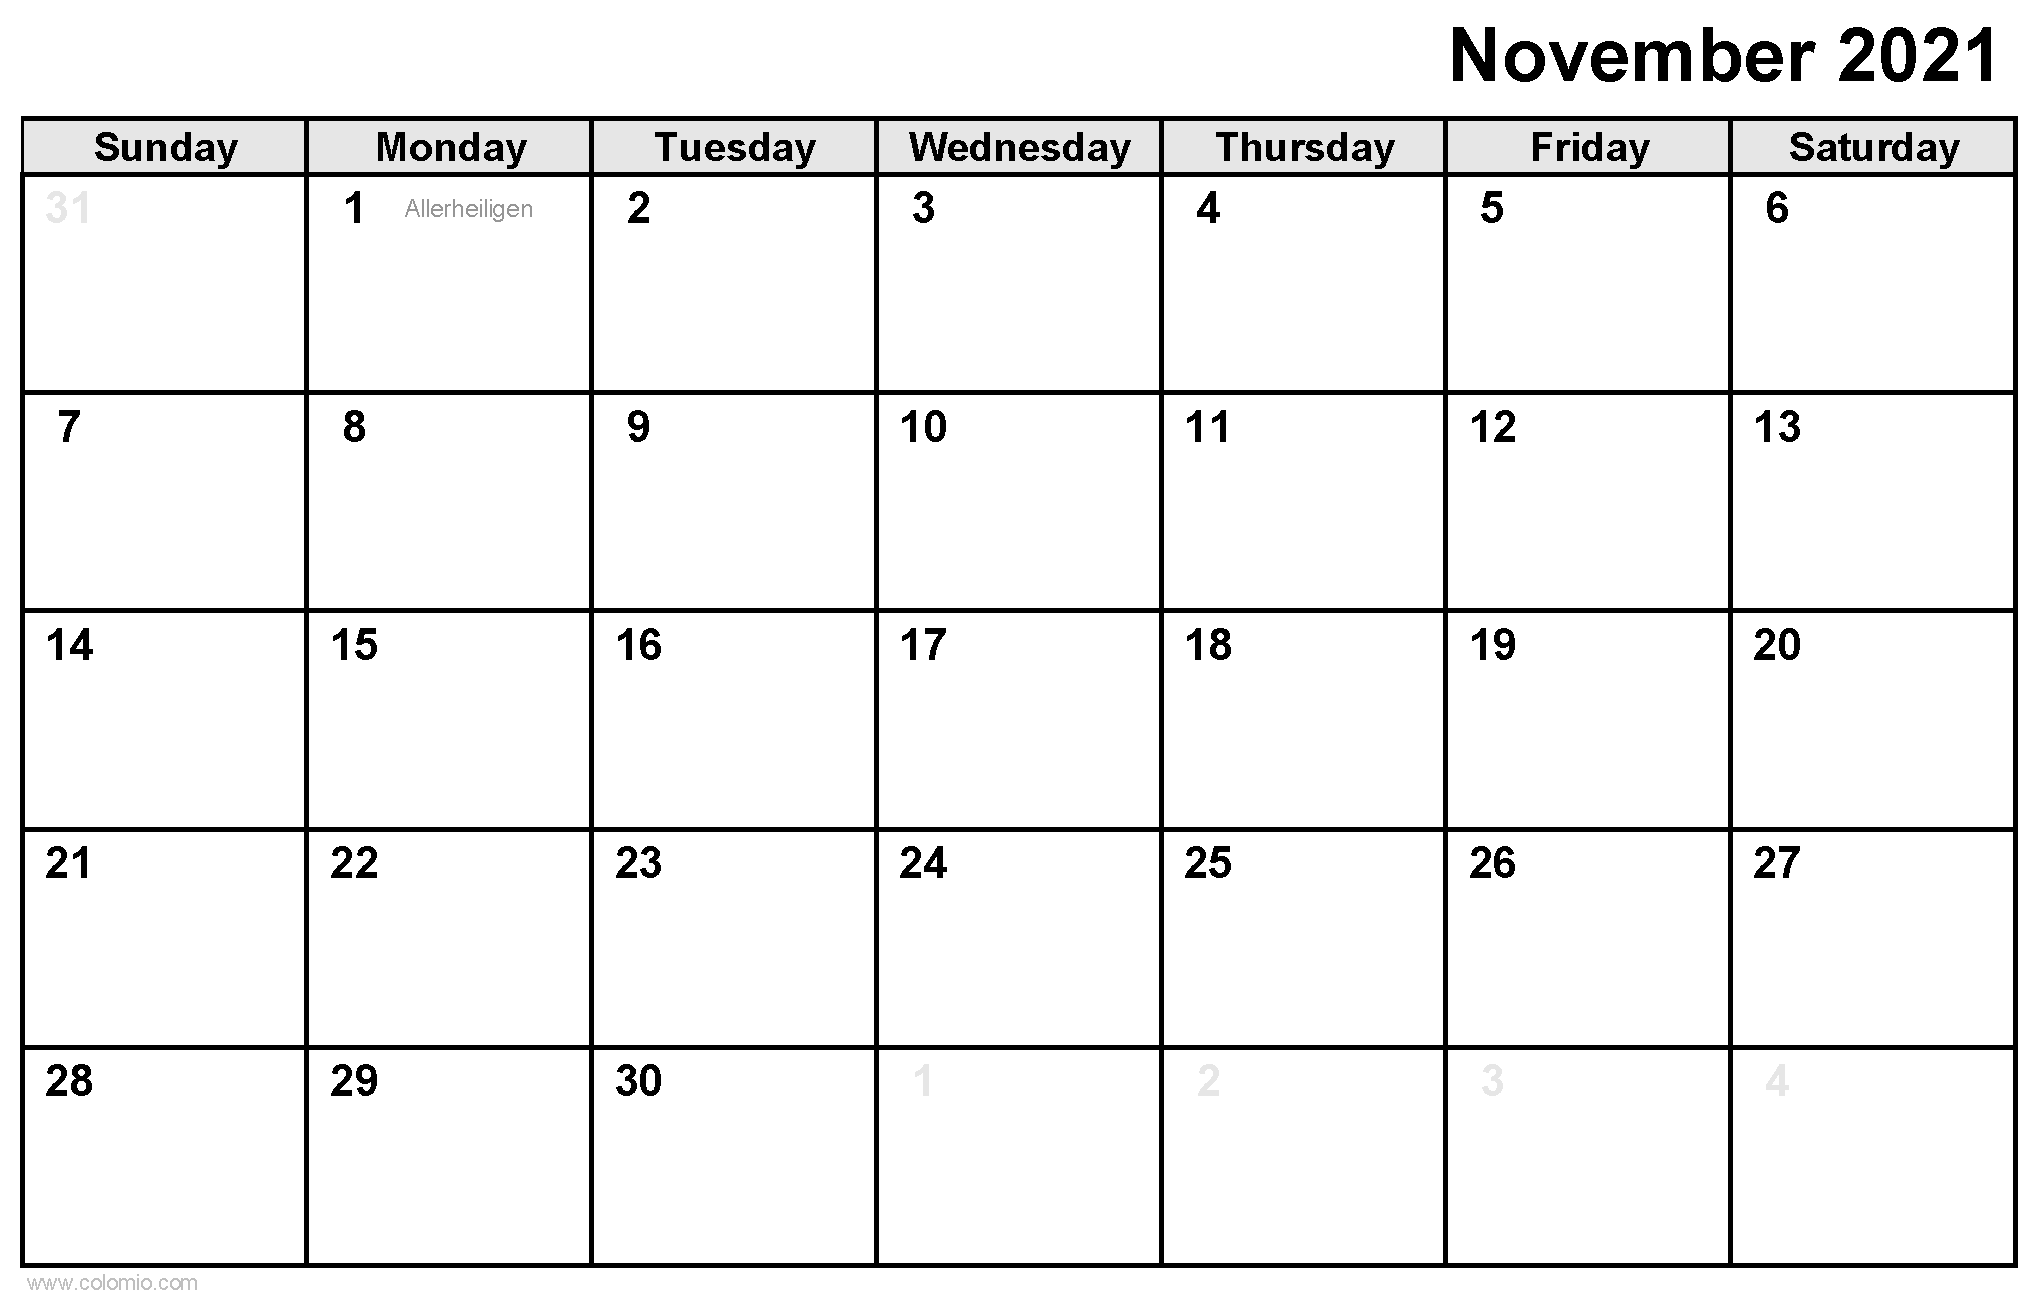 November 2021 Calendar printable